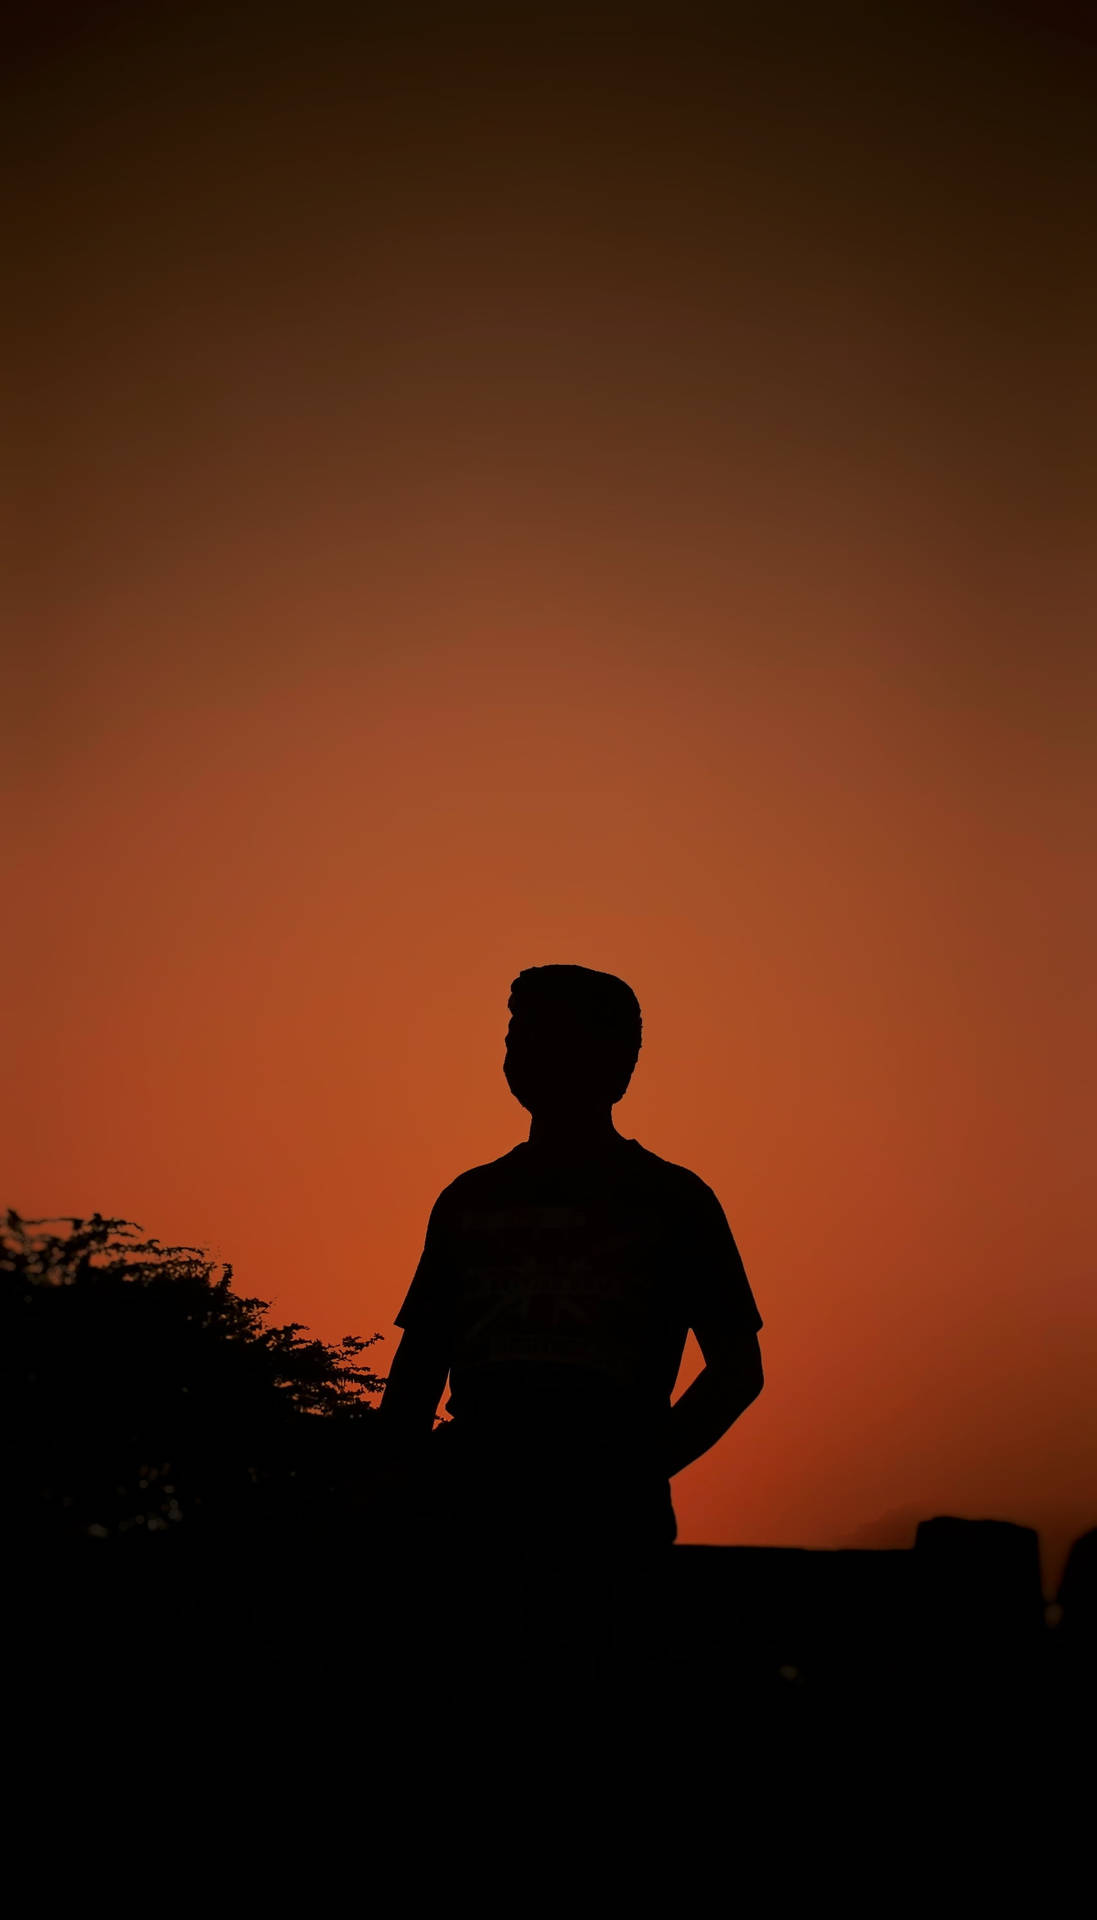 Boy Shadow On An Orange Sunset Sky Wallpaper